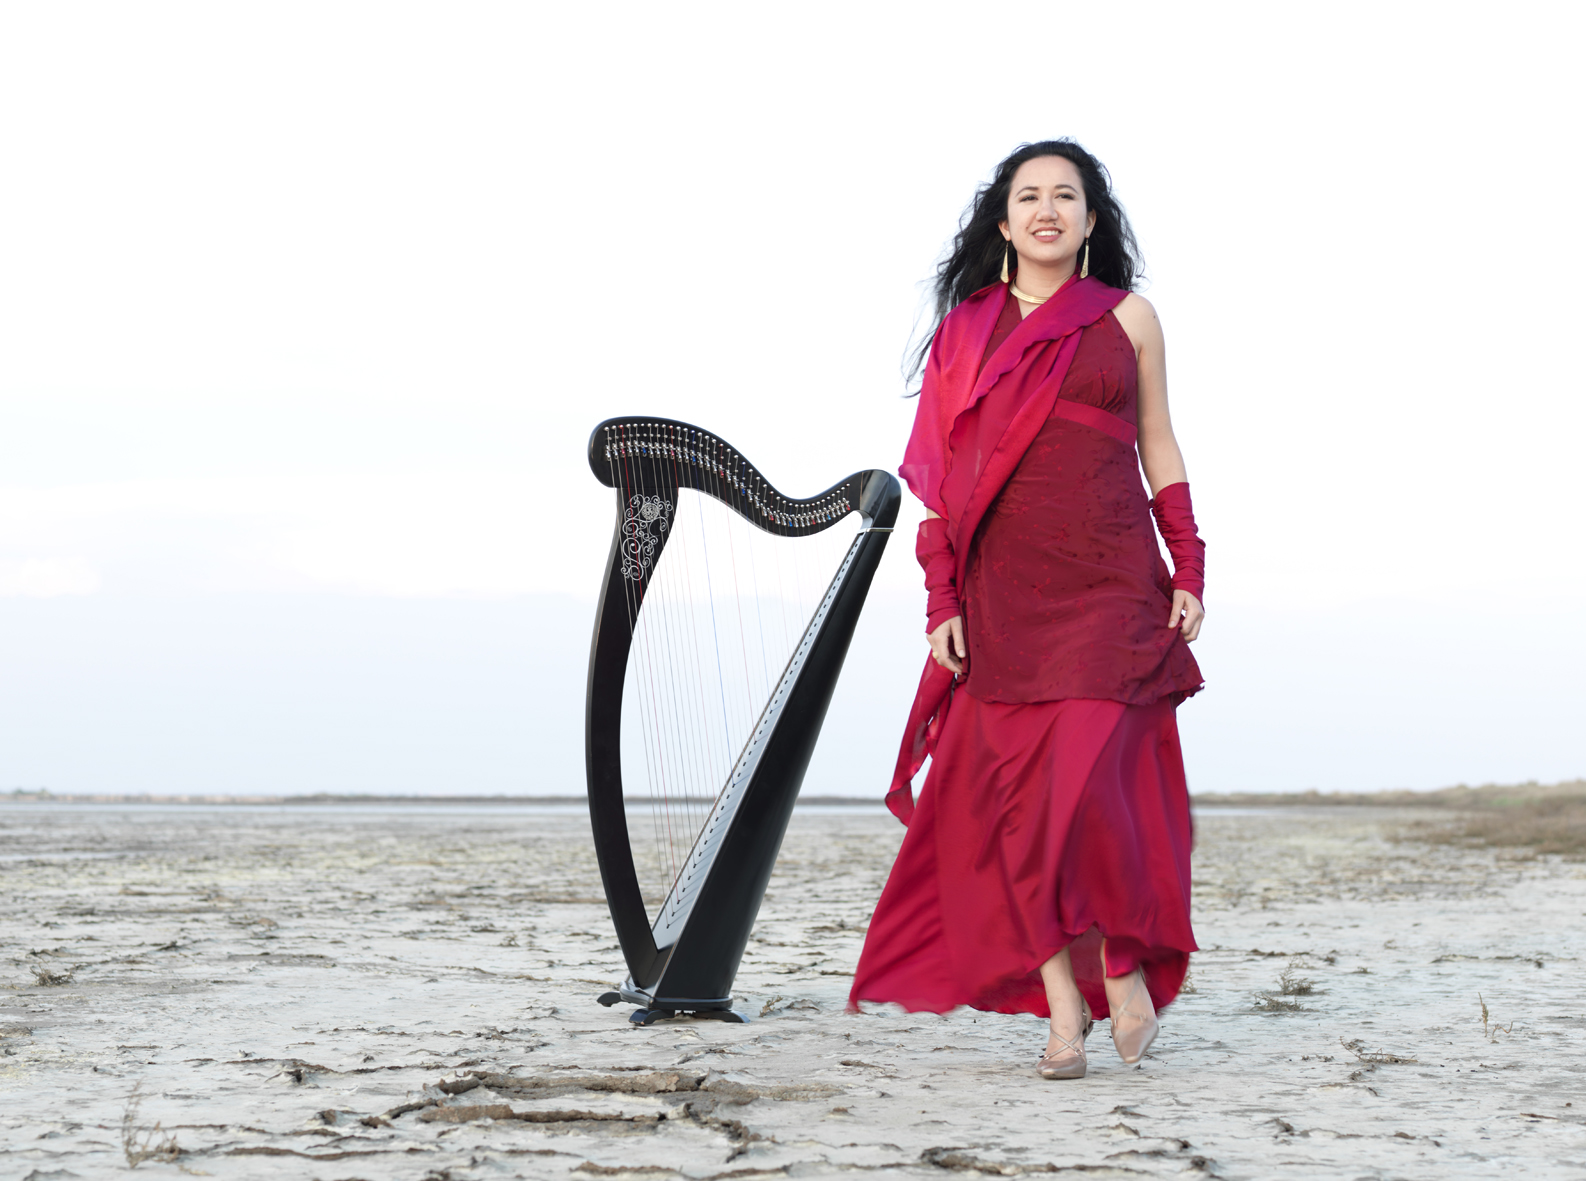 Ameylia Saad parcourt le monde avec sa harpe...